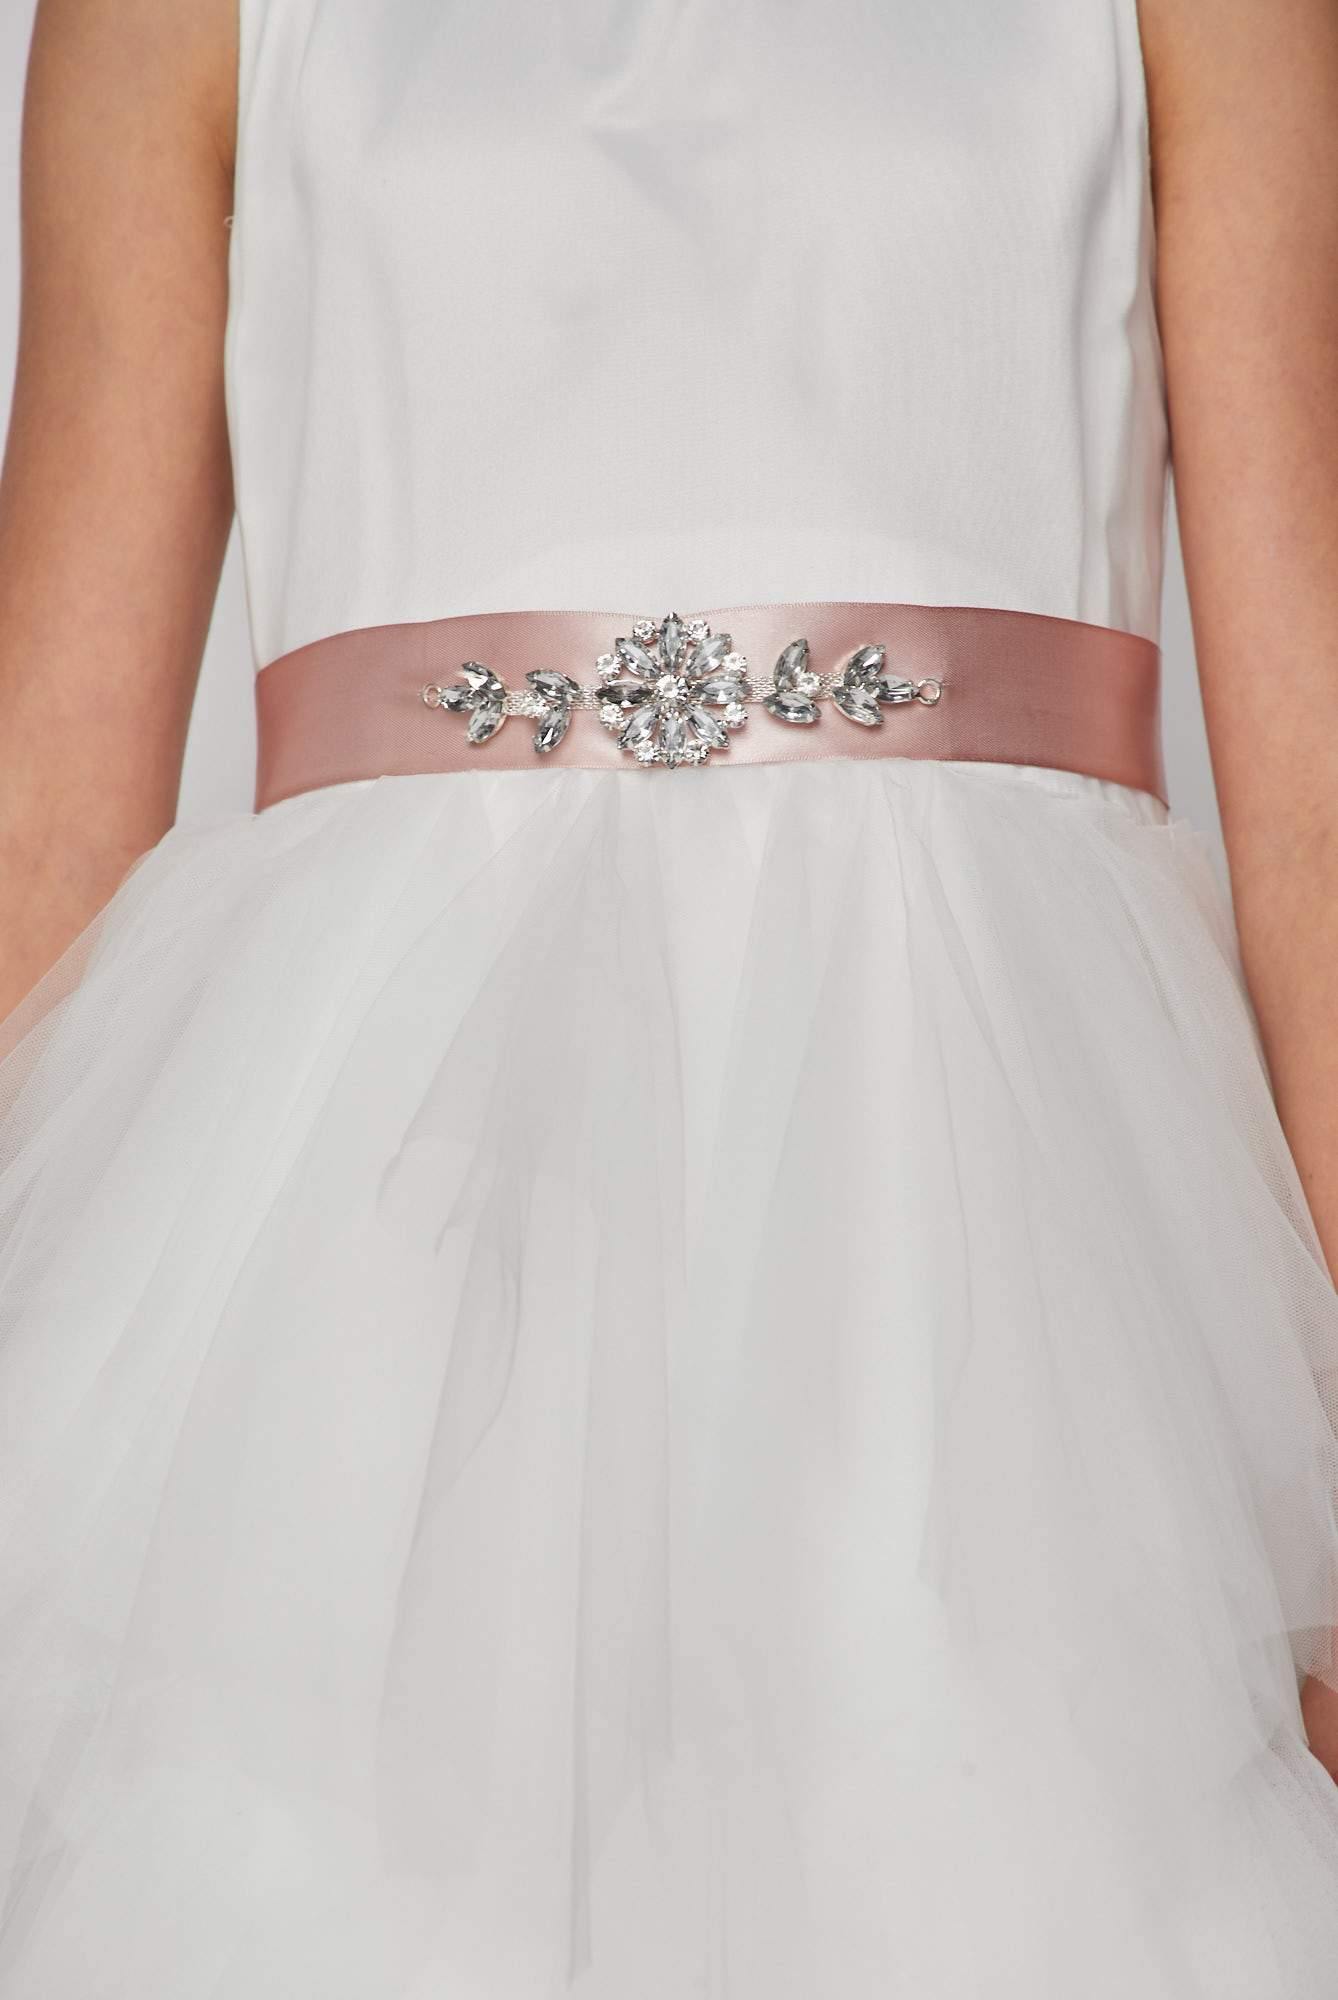 Sleeveless Satin High Low Flower Girls Dress - The Dress Outlet Cinderella Couture